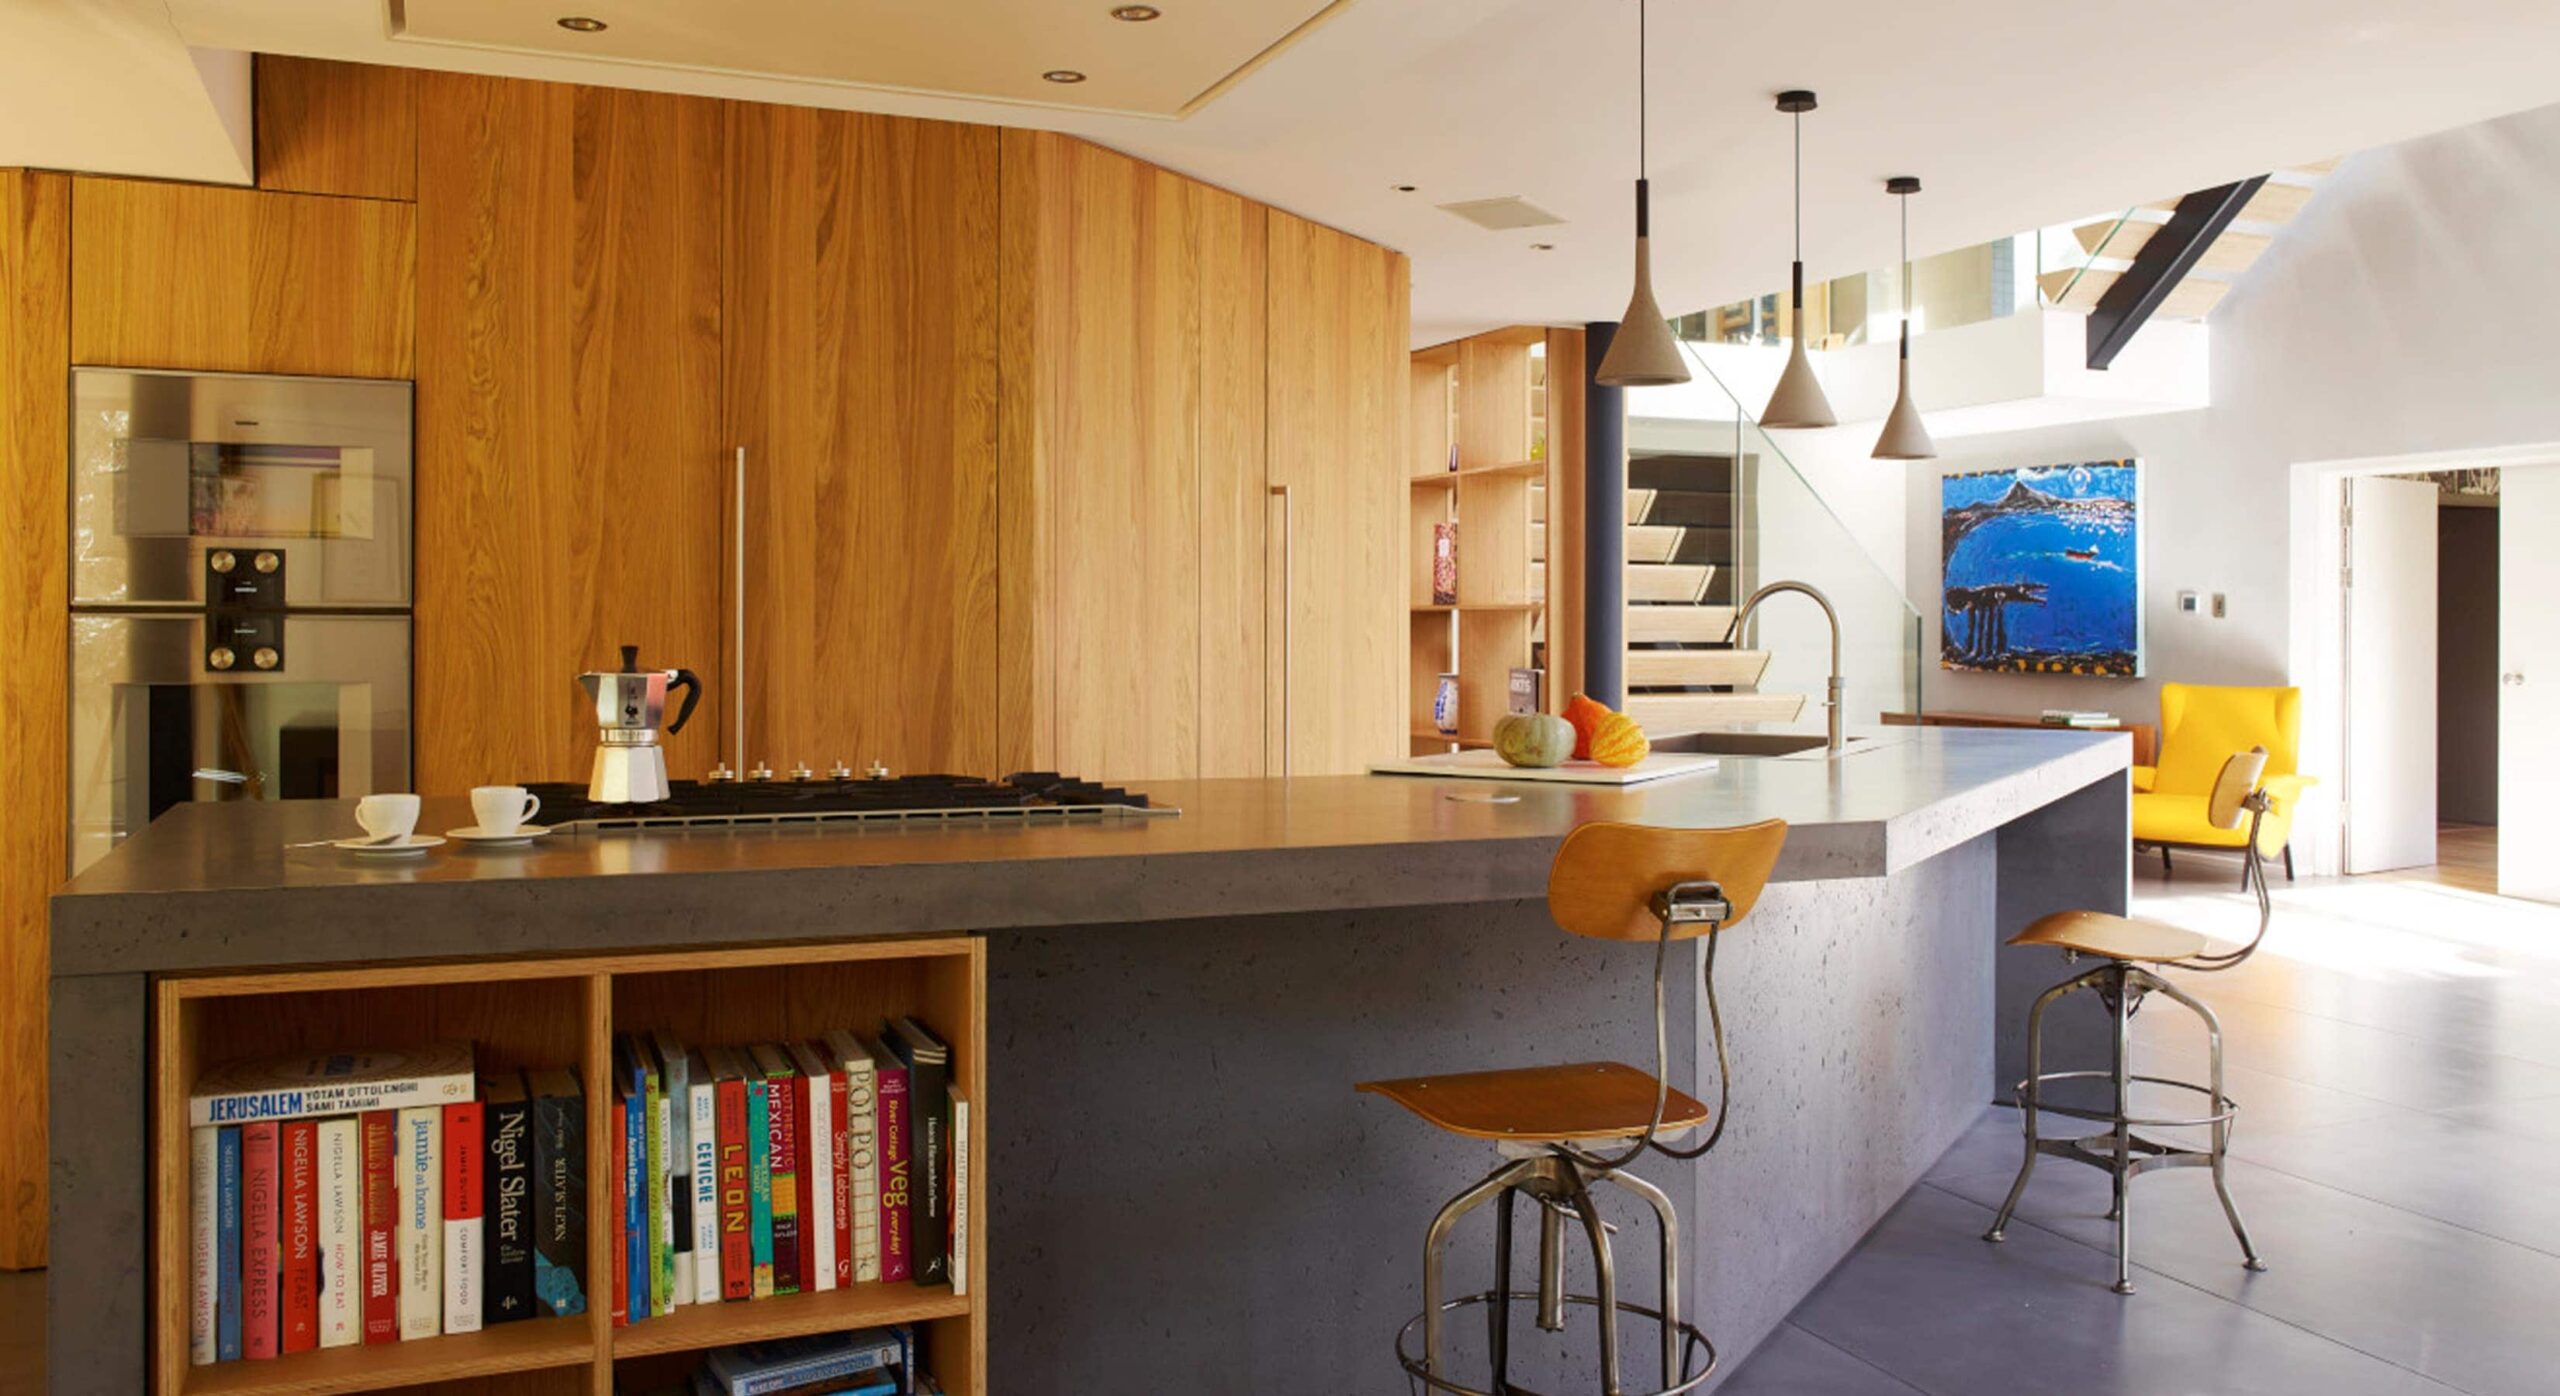 Uplands kitchen extension concept